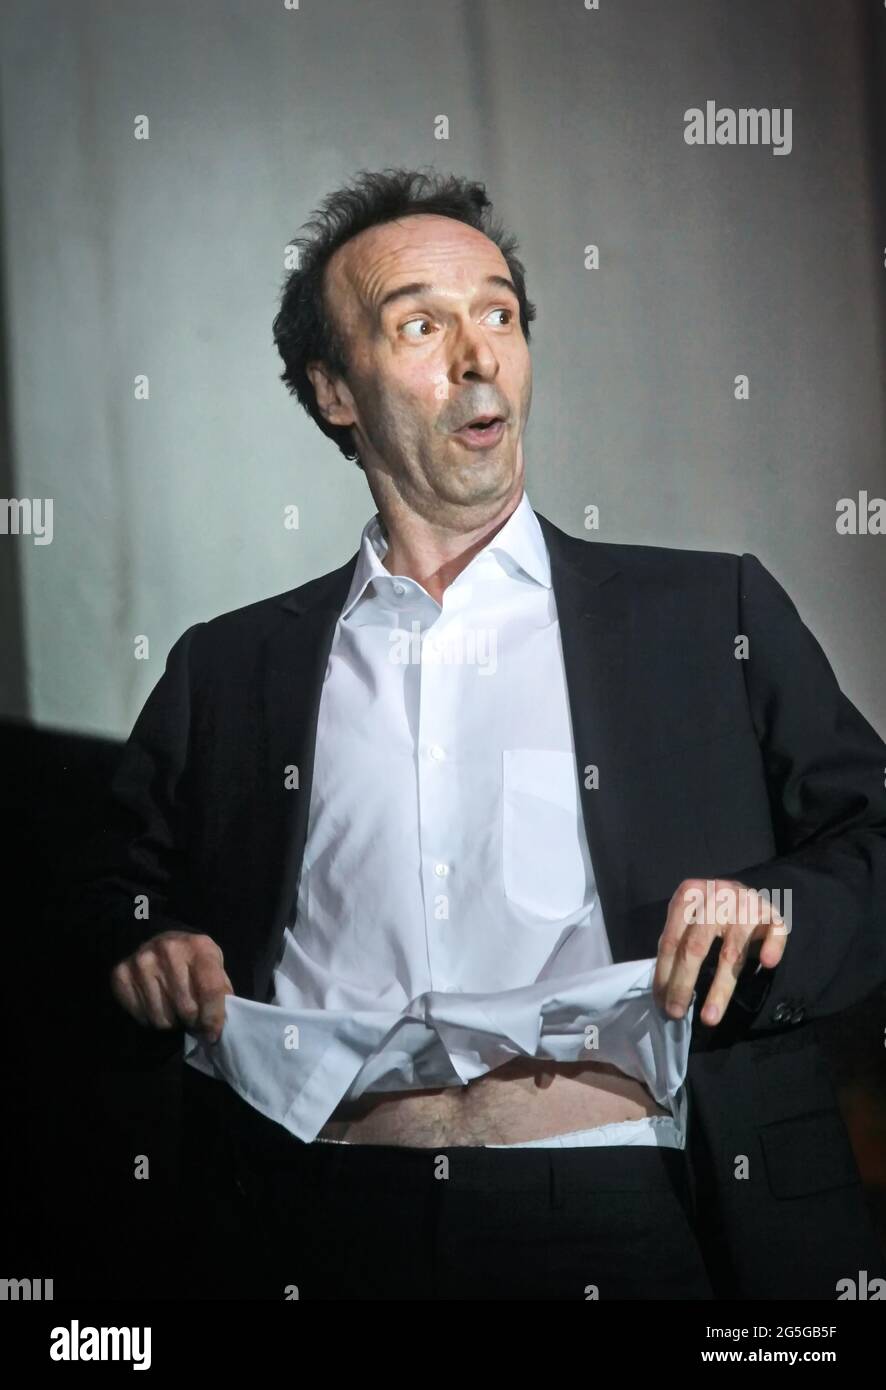 Italian actor Roberto Benigni, gestures during a ceremony.  Rome, Italy - April 2011 Stock Photo